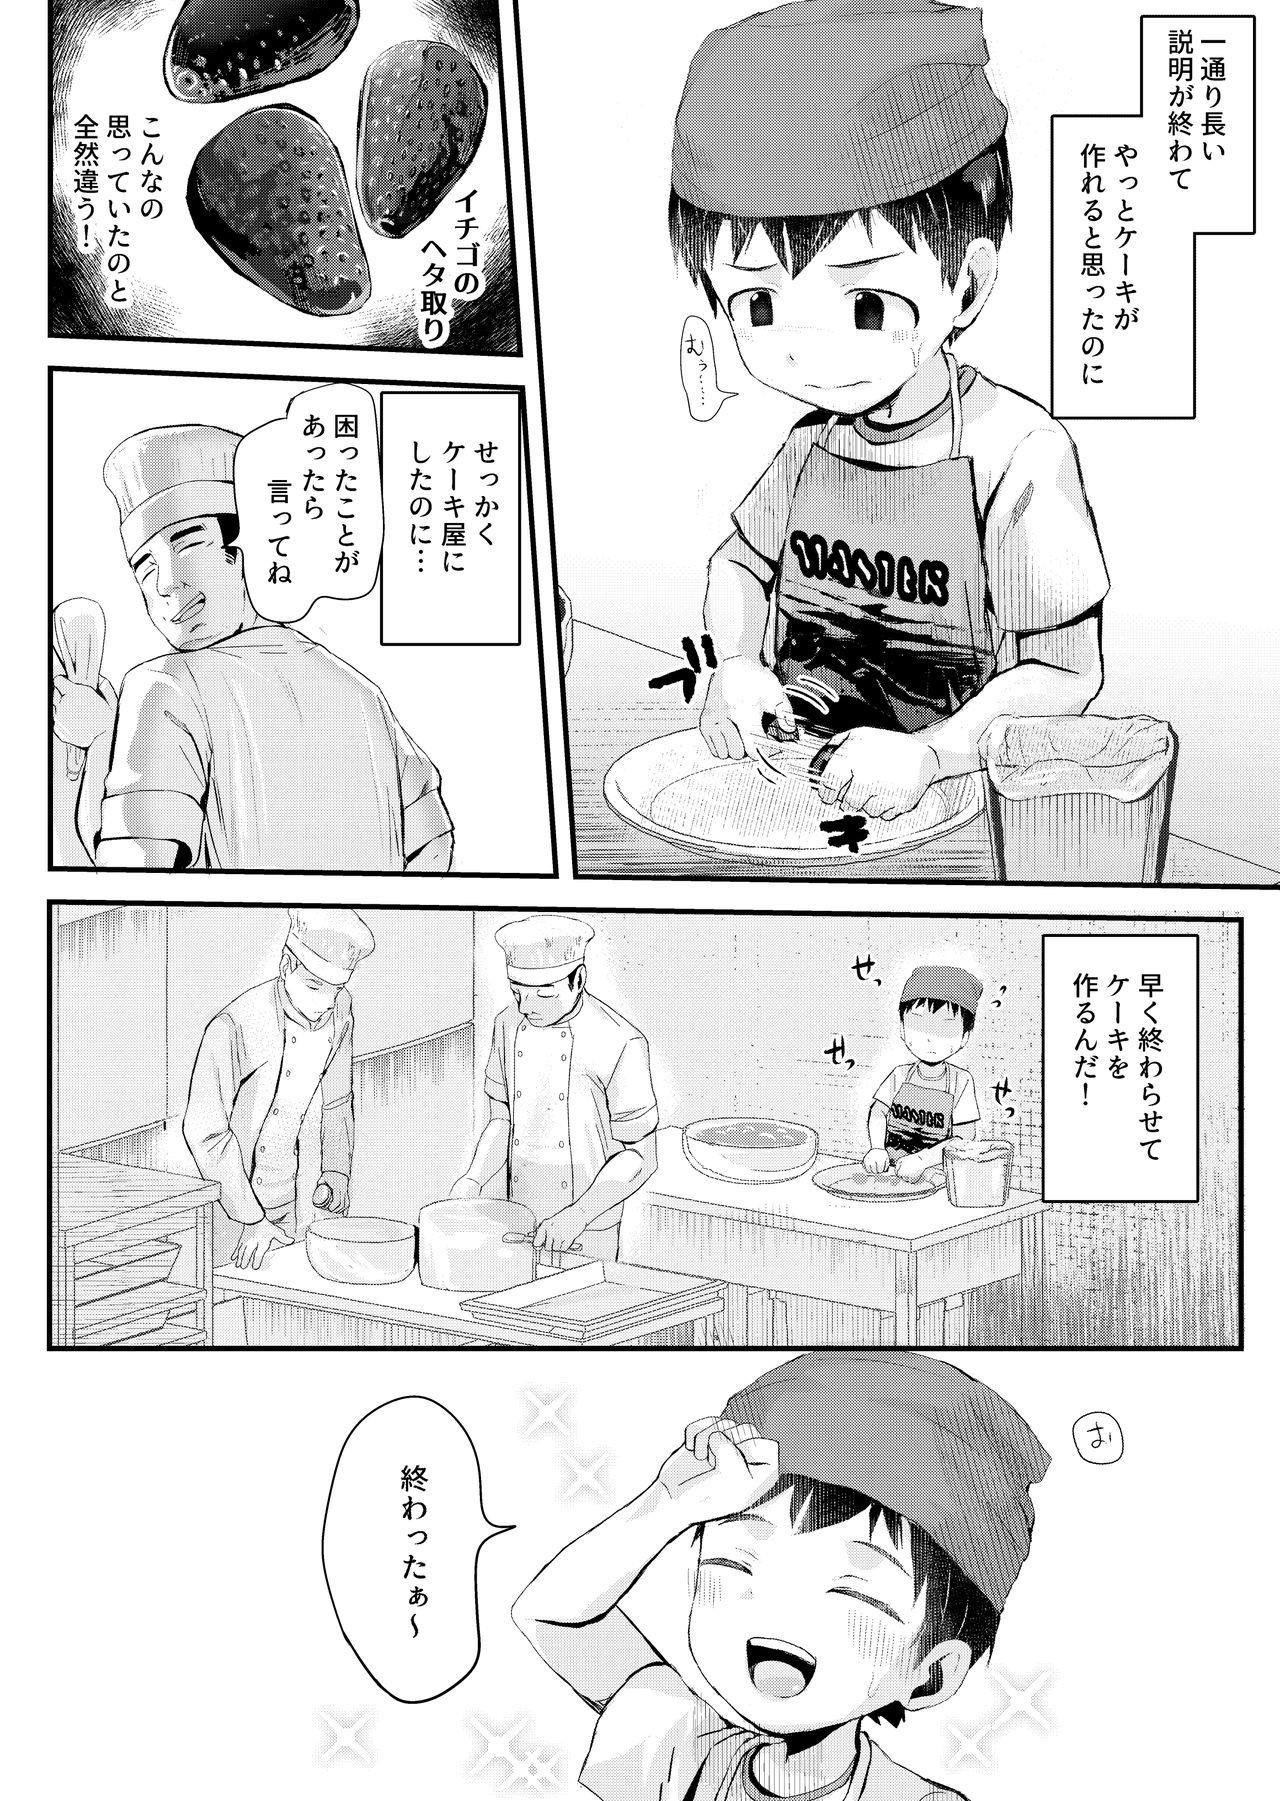 Punishment Shokugyou Taiken Dekiru kana? - Original Story - Page 5